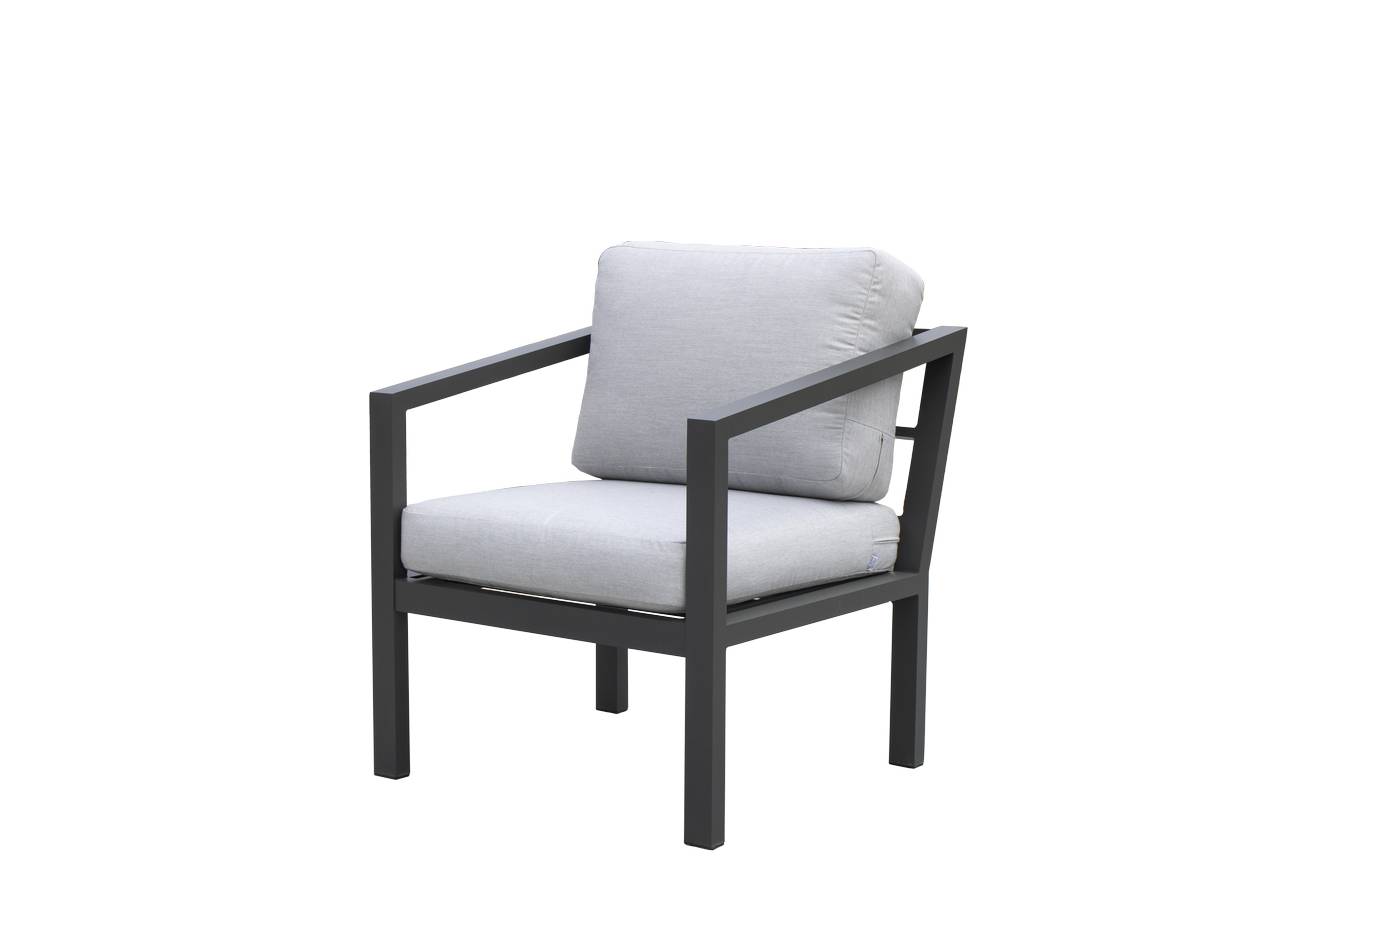 Set Aluminio Oregón-7 - Conjunto de aluminio: sofá de 2 plazas + 2 sillones + 1 mesa de centro. Colores blanco, antracita, marrón, champagne o plata.